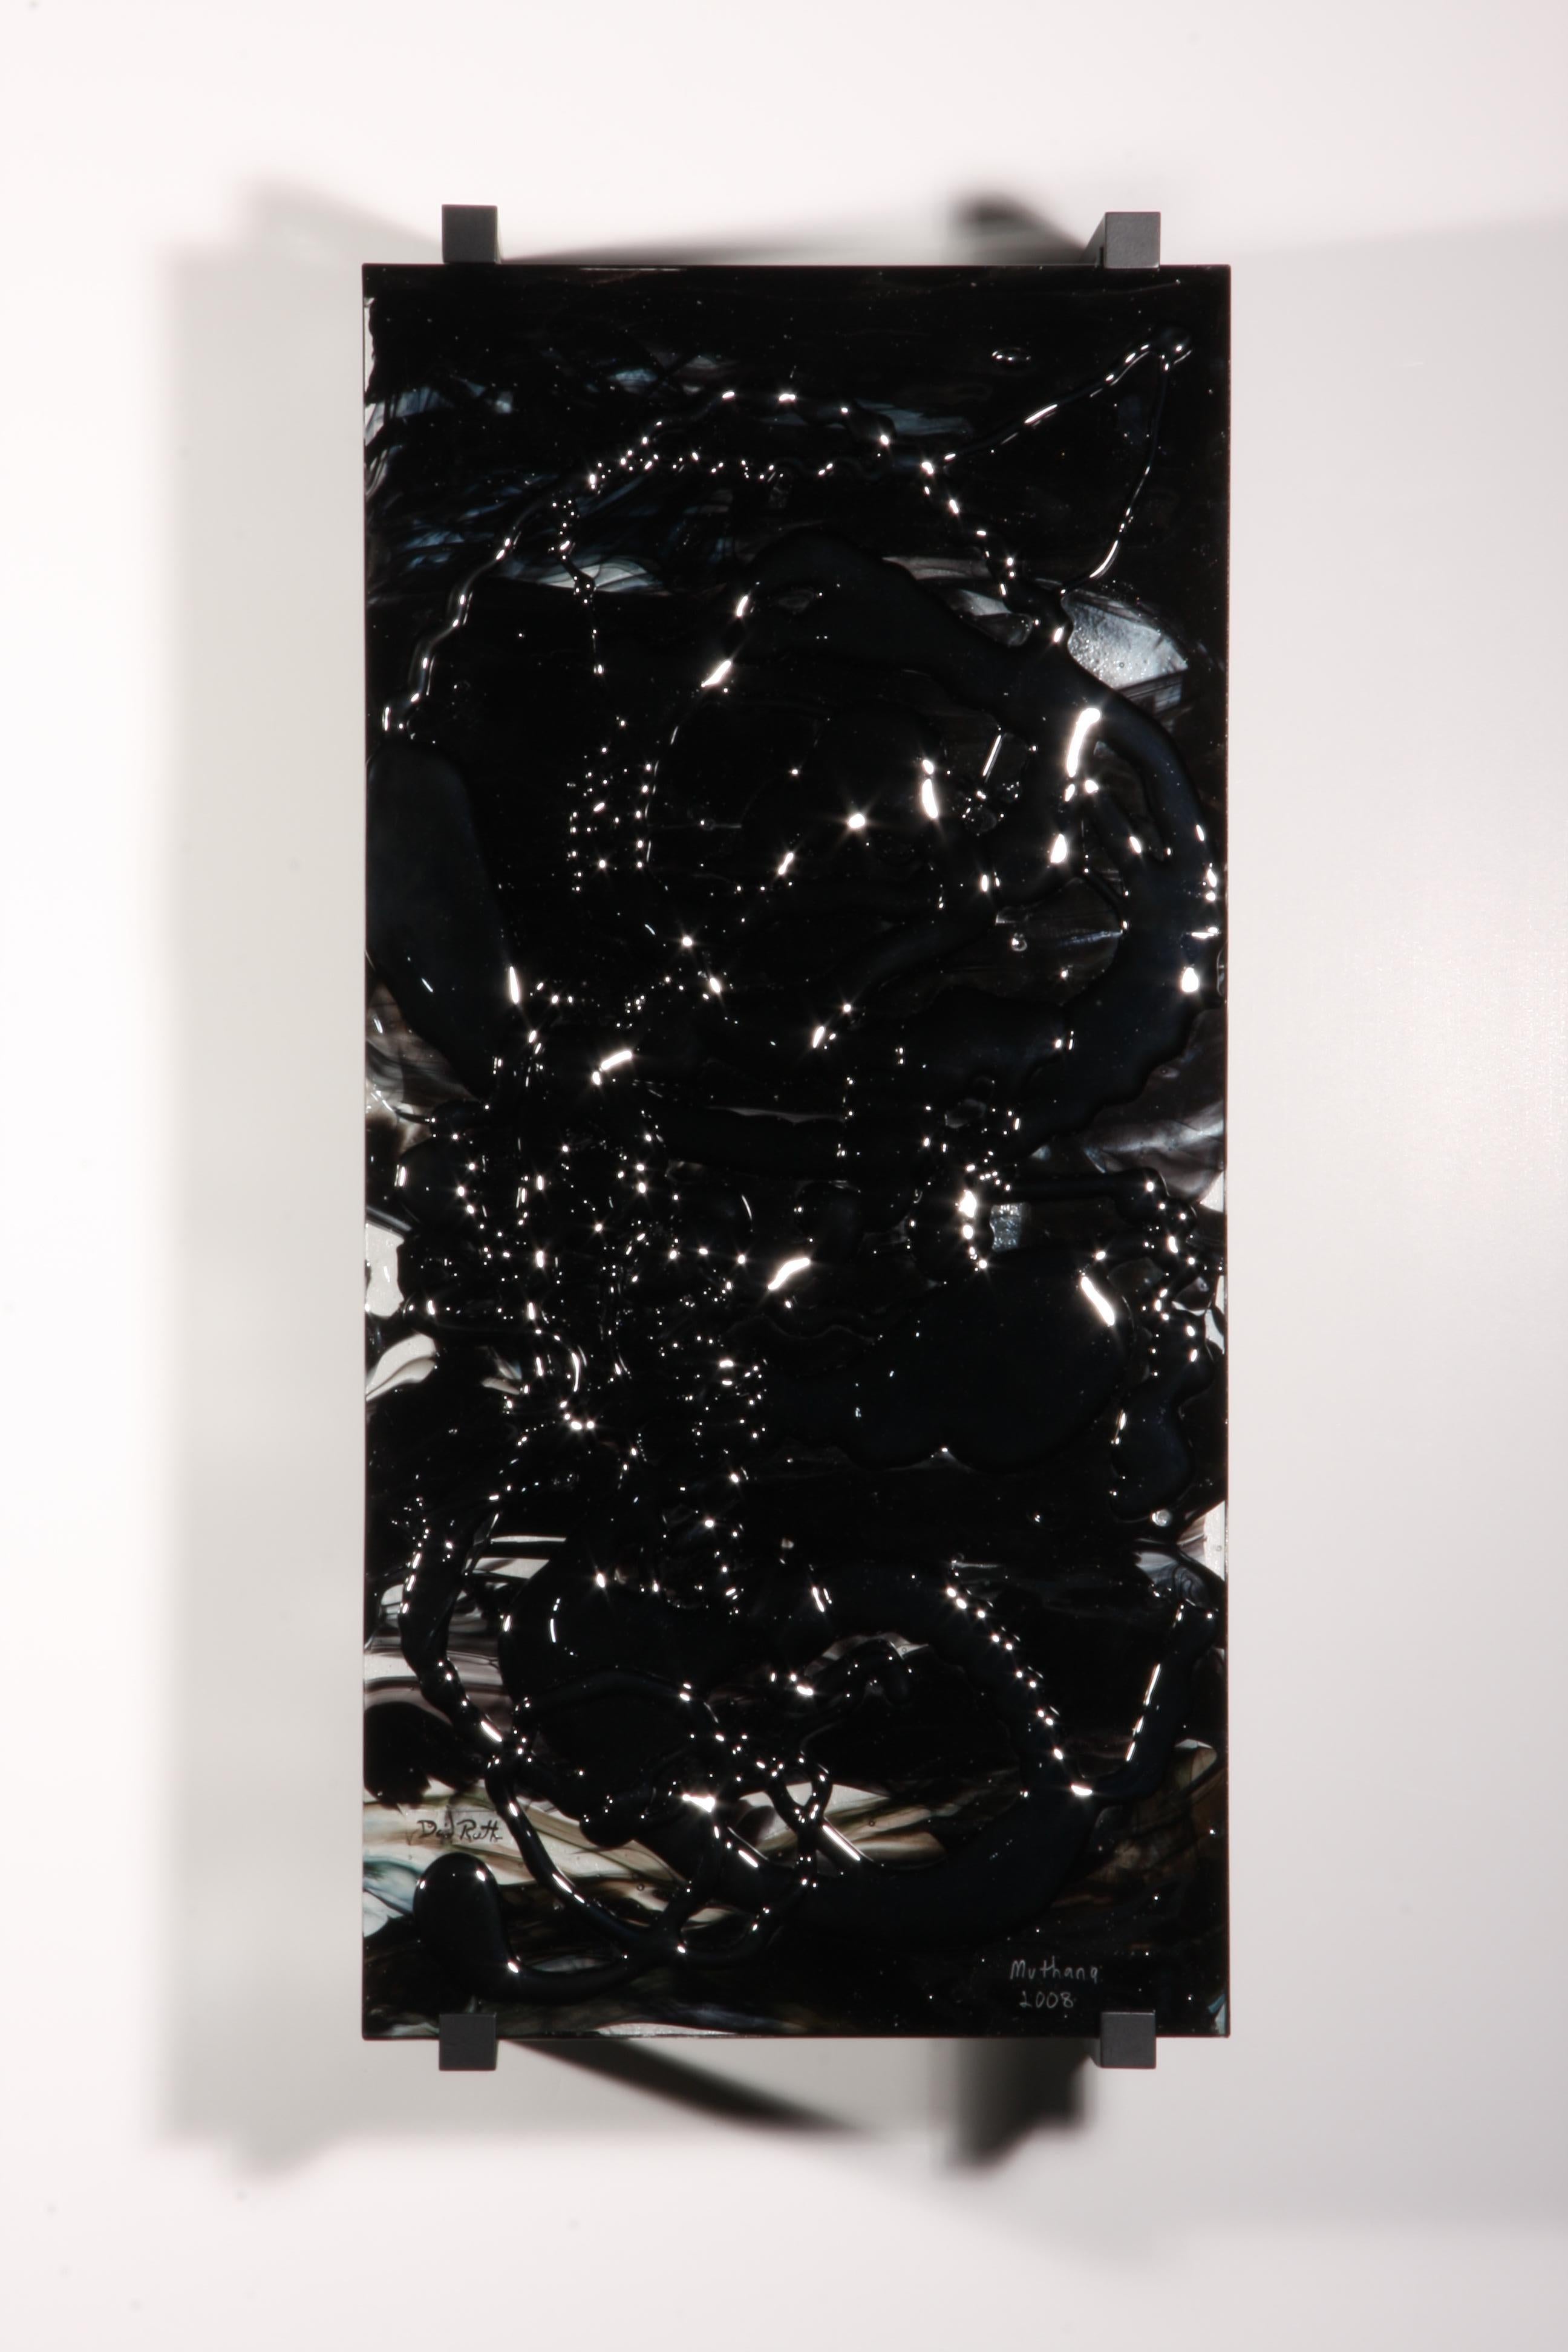 Escultura abstracta de vidrio colado, "Muthana", 2008 de David Ruth